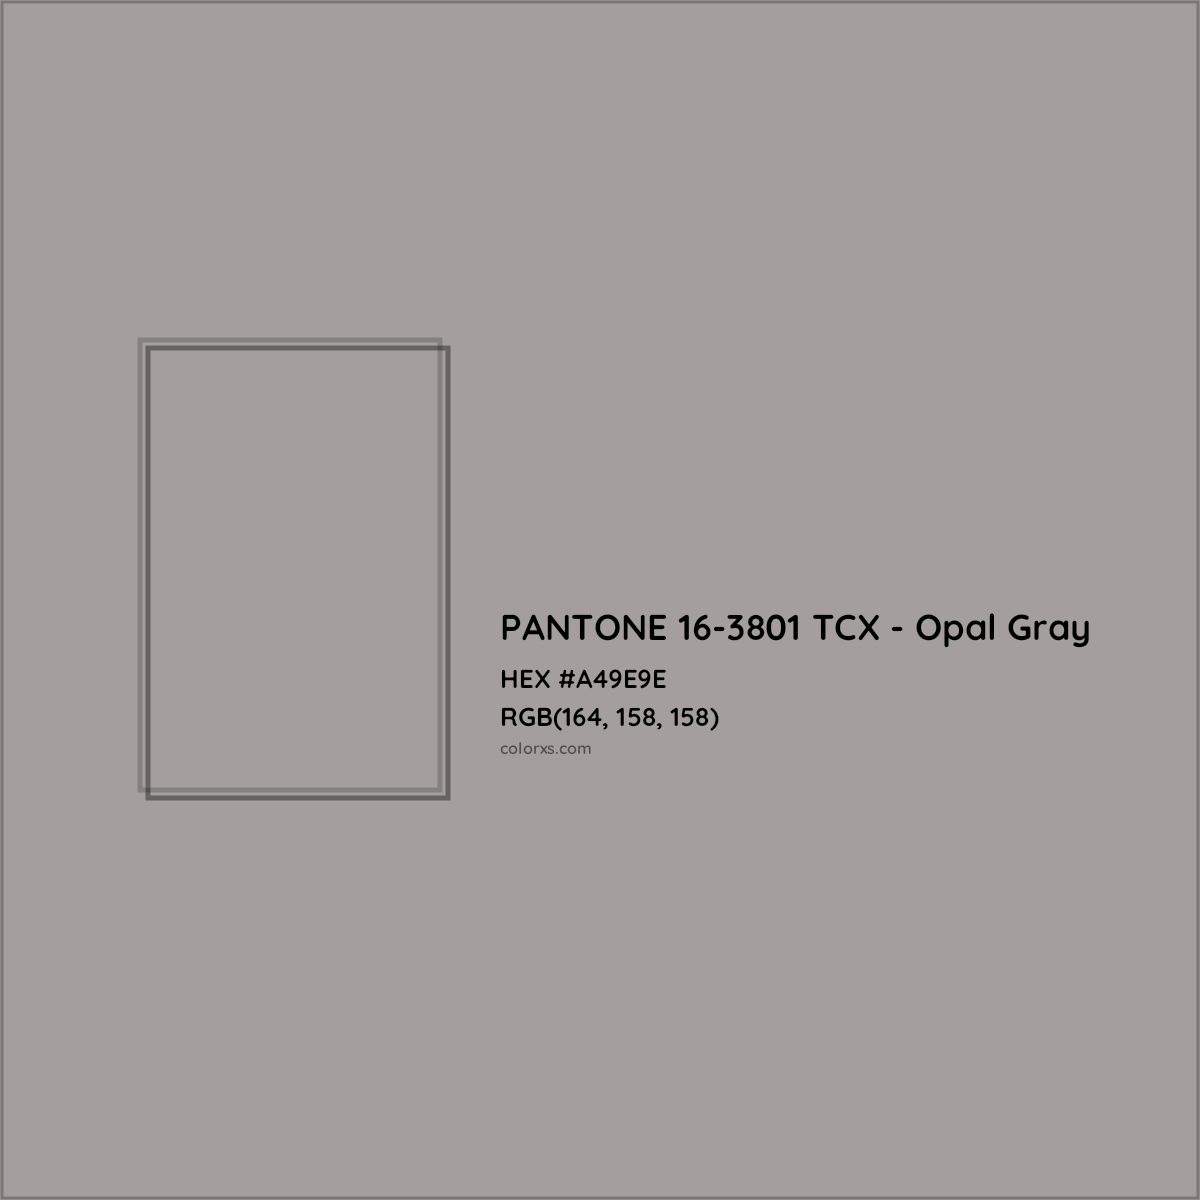 HEX #A49E9E PANTONE 16-3801 TCX - Opal Gray CMS Pantone TCX - Color Code